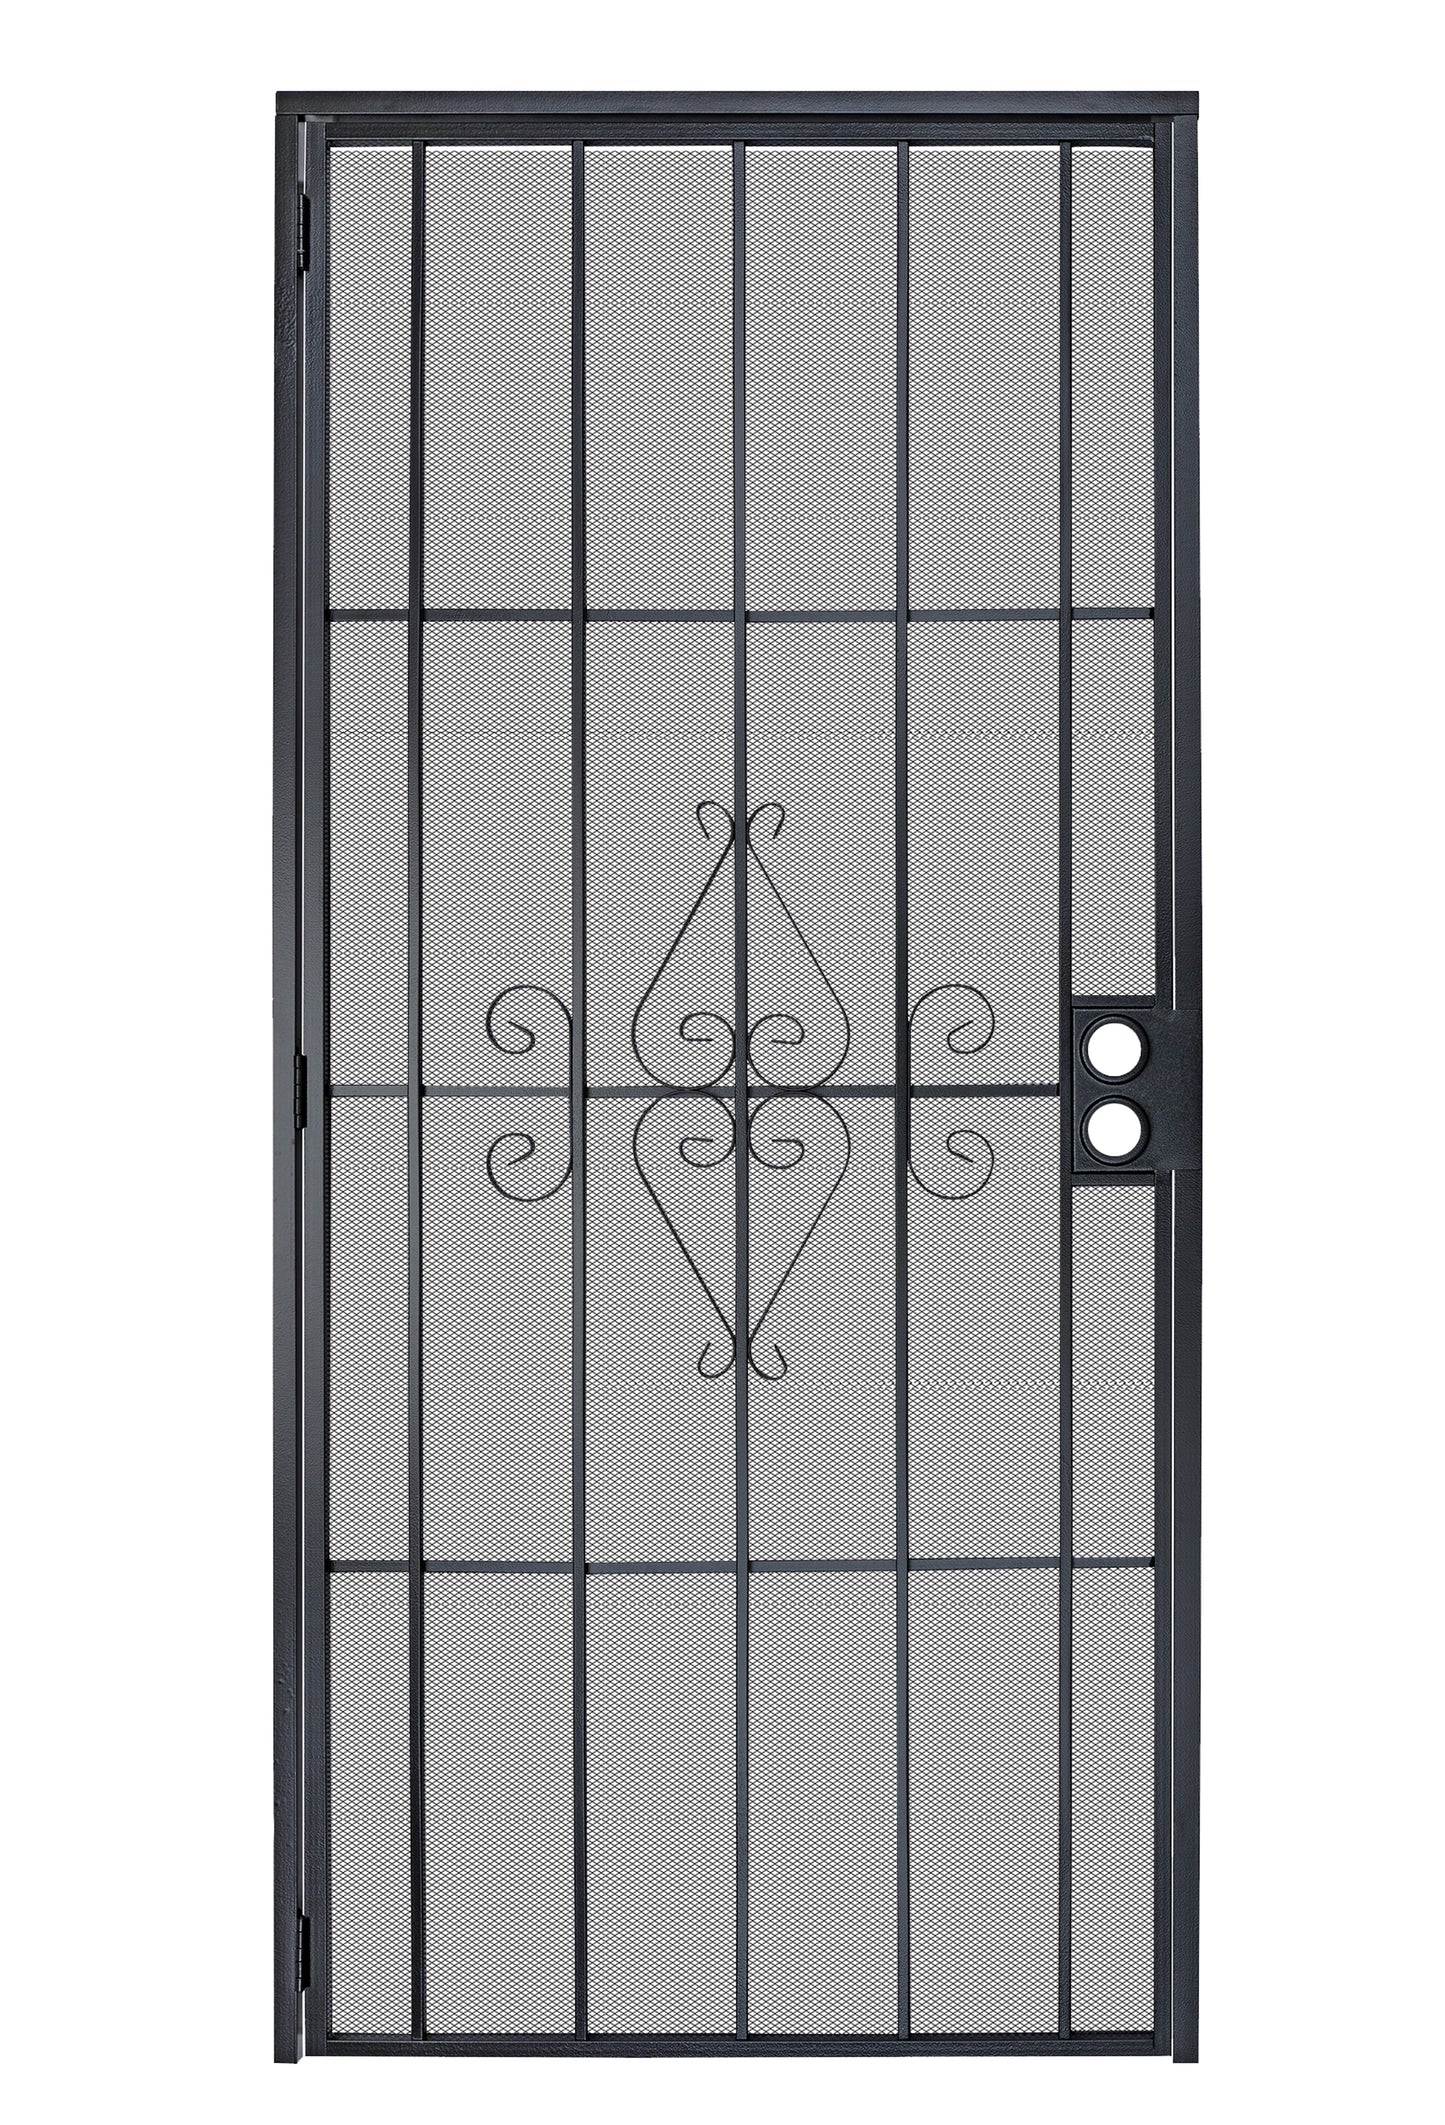 Security Screen Door #A6900 (Will not ship)